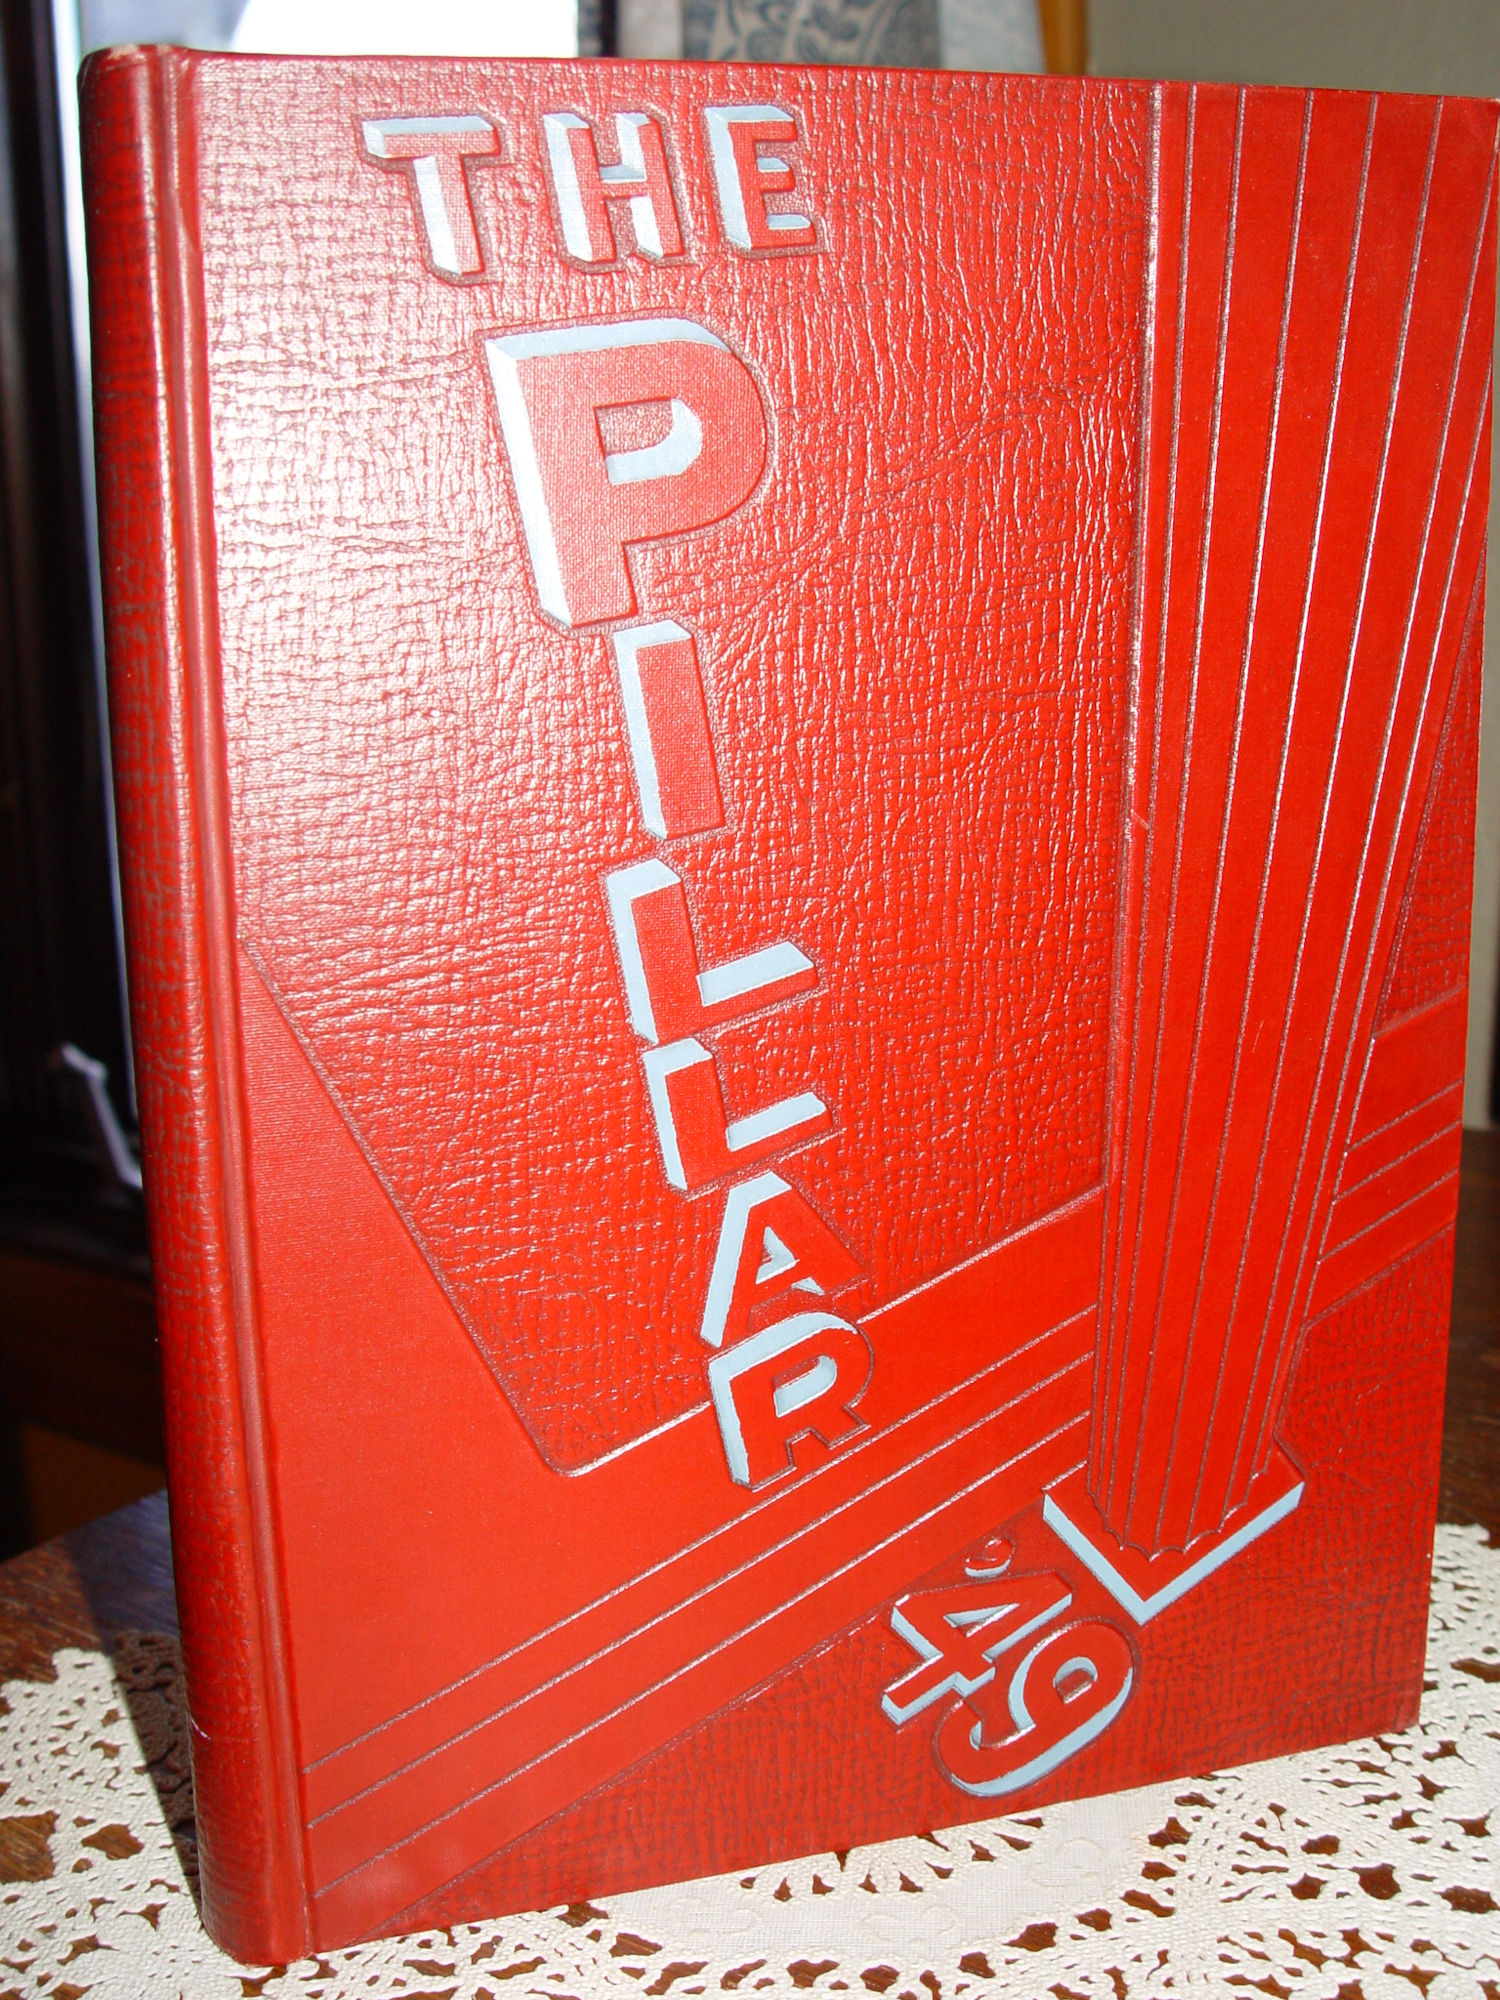 1949 Yearbook, The Pillar, George Peabody
                        College For Teachers, Nashville, TN